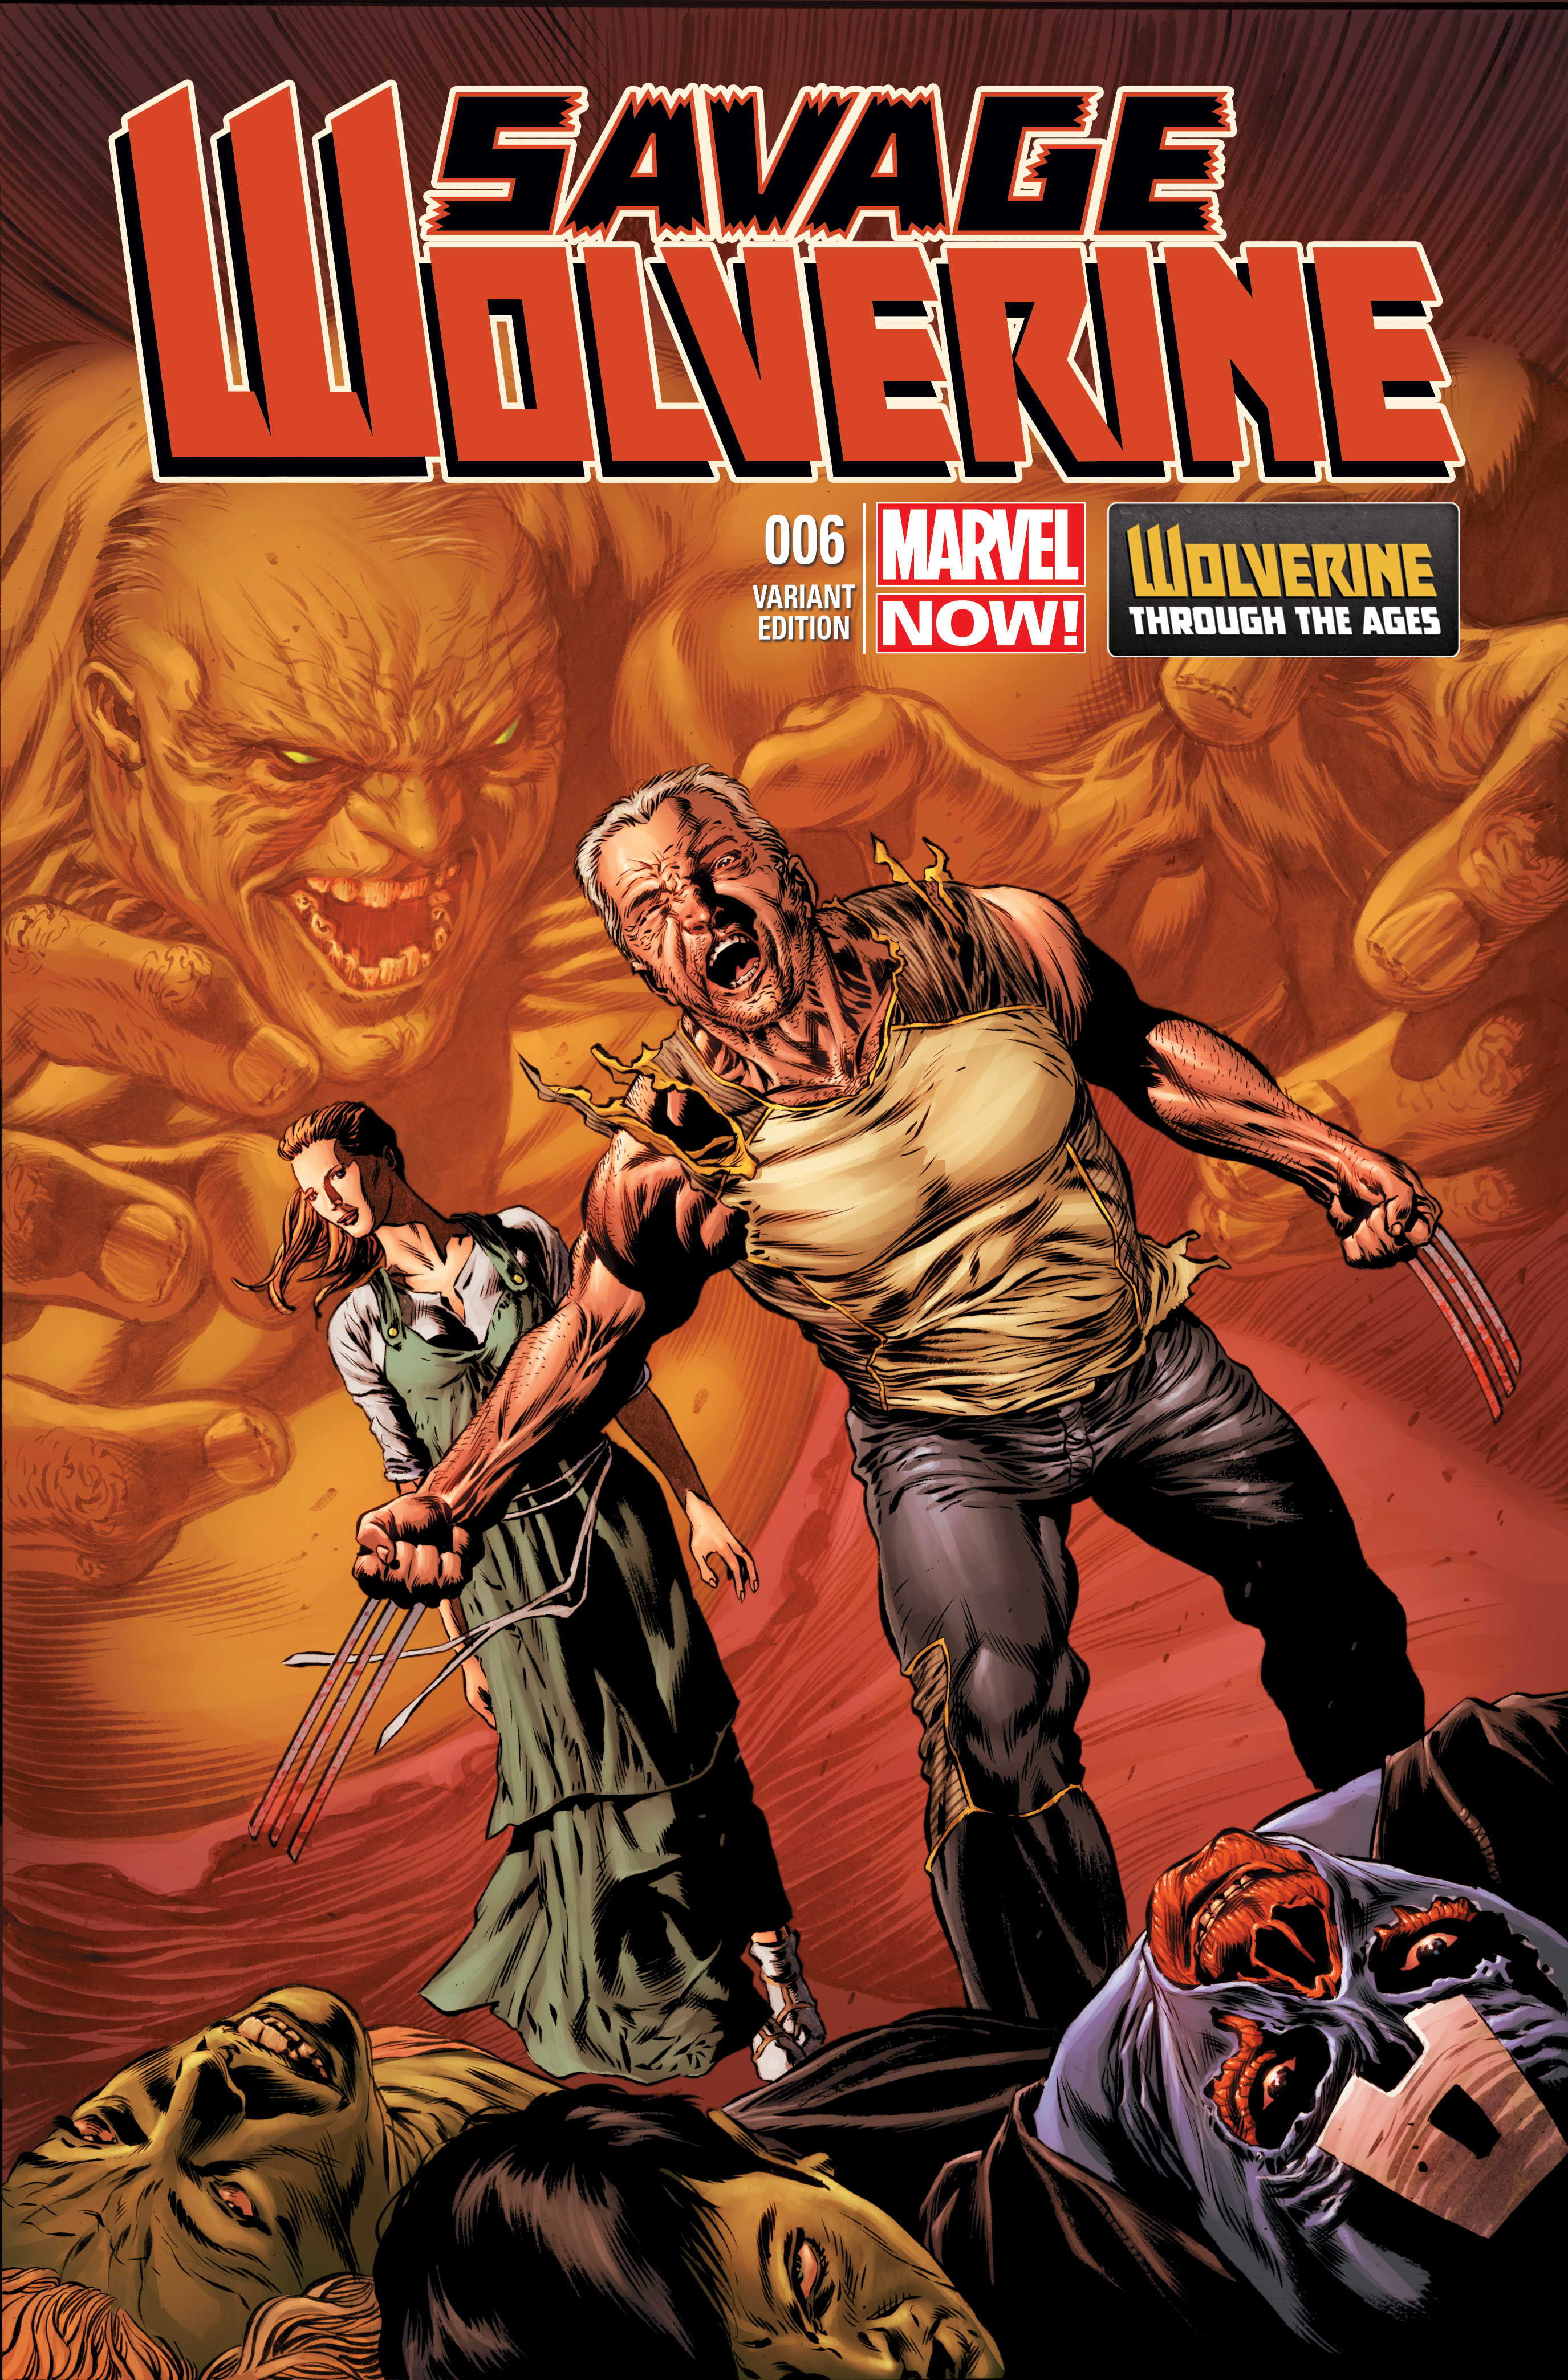 Savage Wolverine (2013) #6 (Perkins Wolverine Costume Variant)